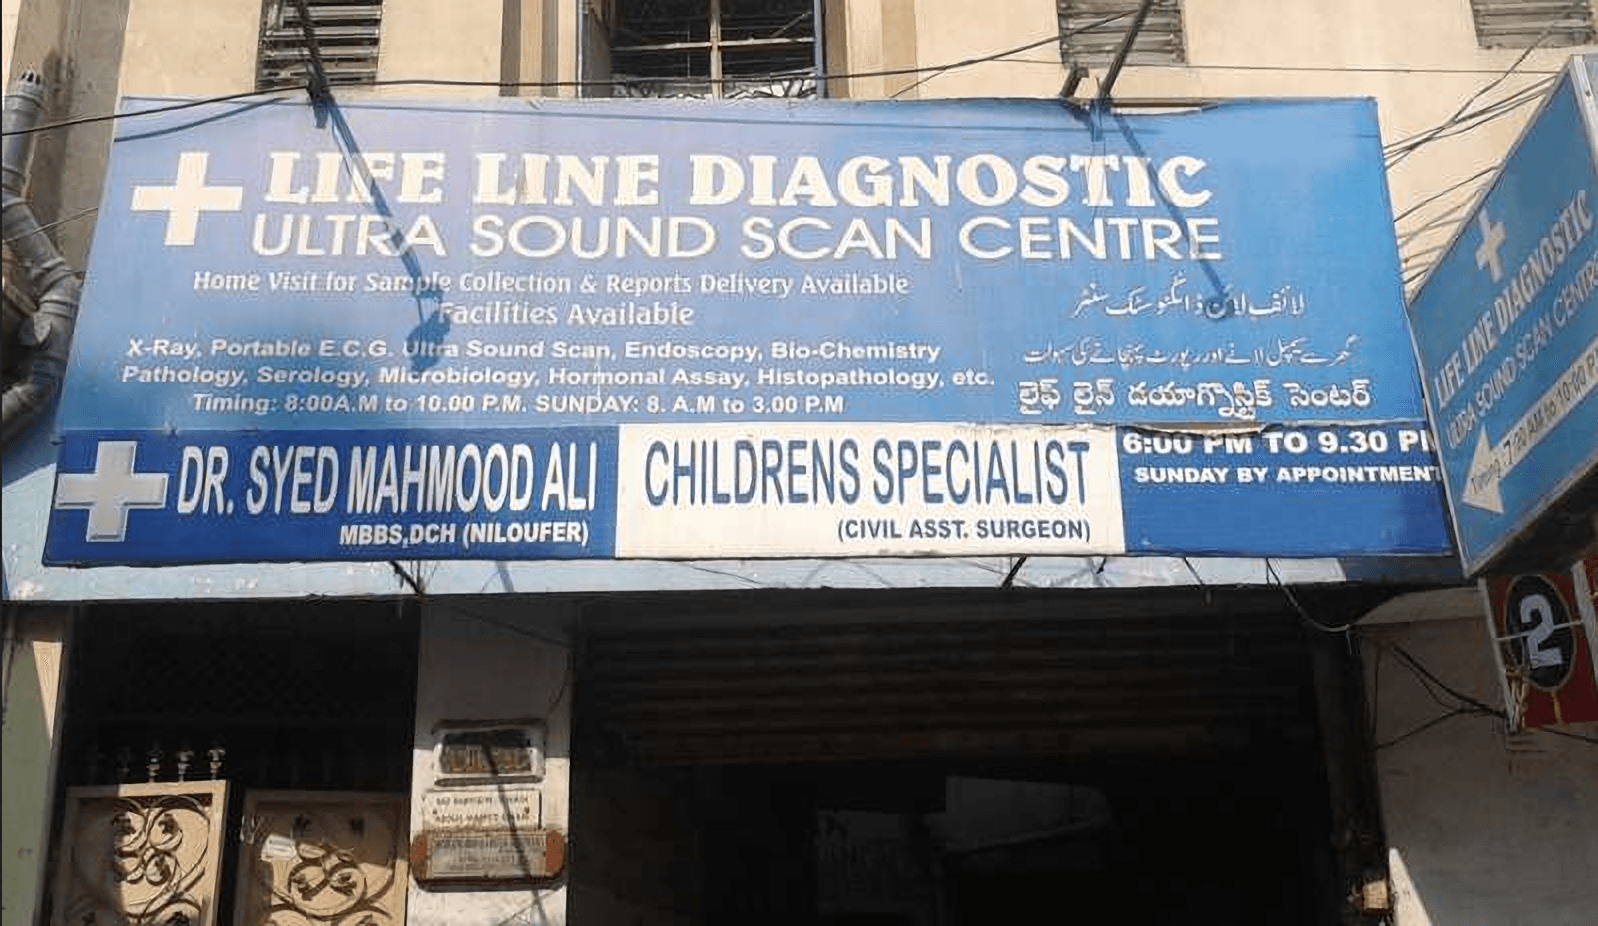 Lifeline Diagnostics